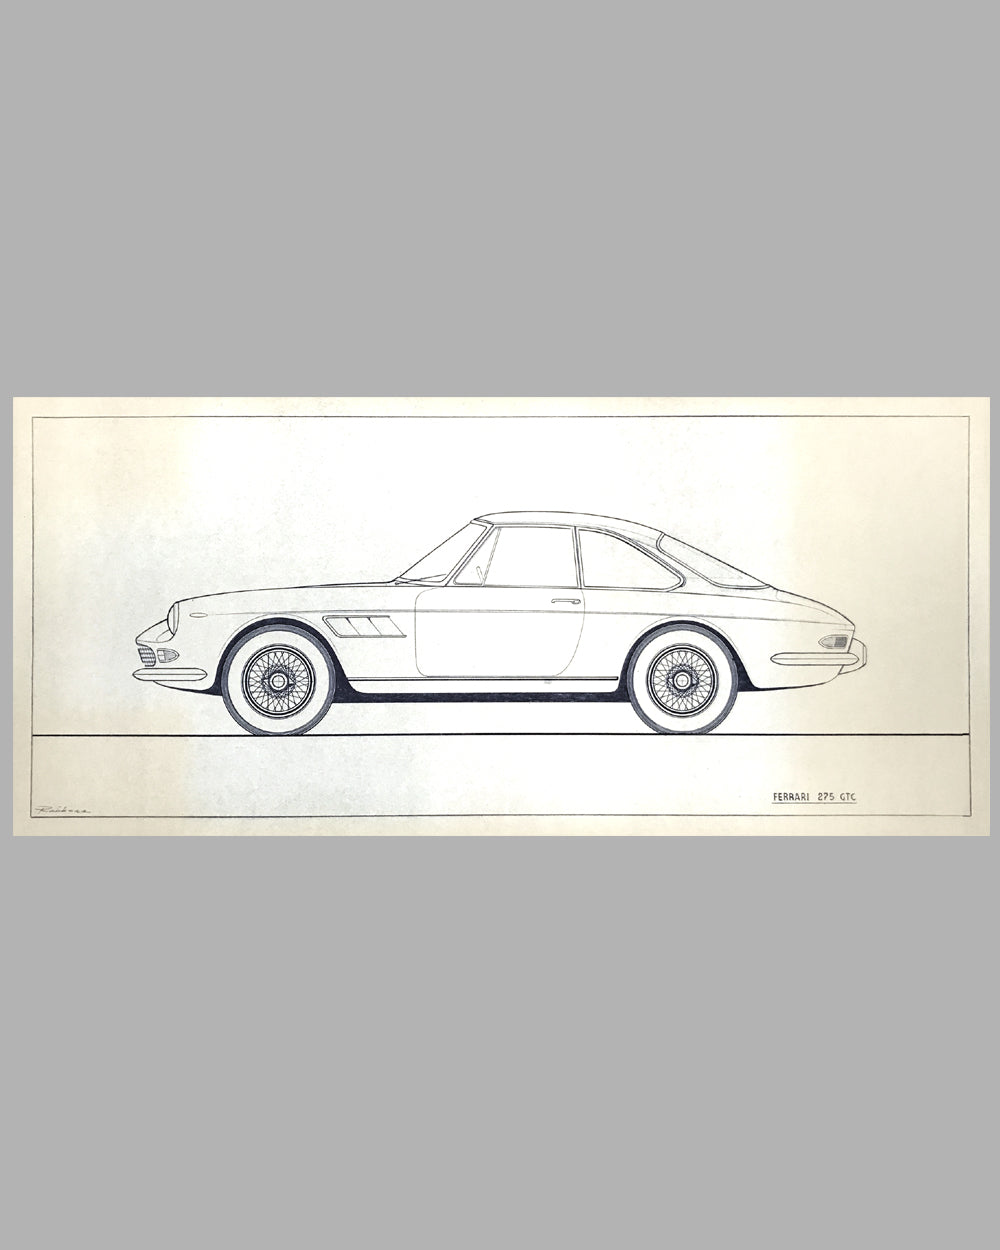 Ferrari 275 GTC original factory blueprint